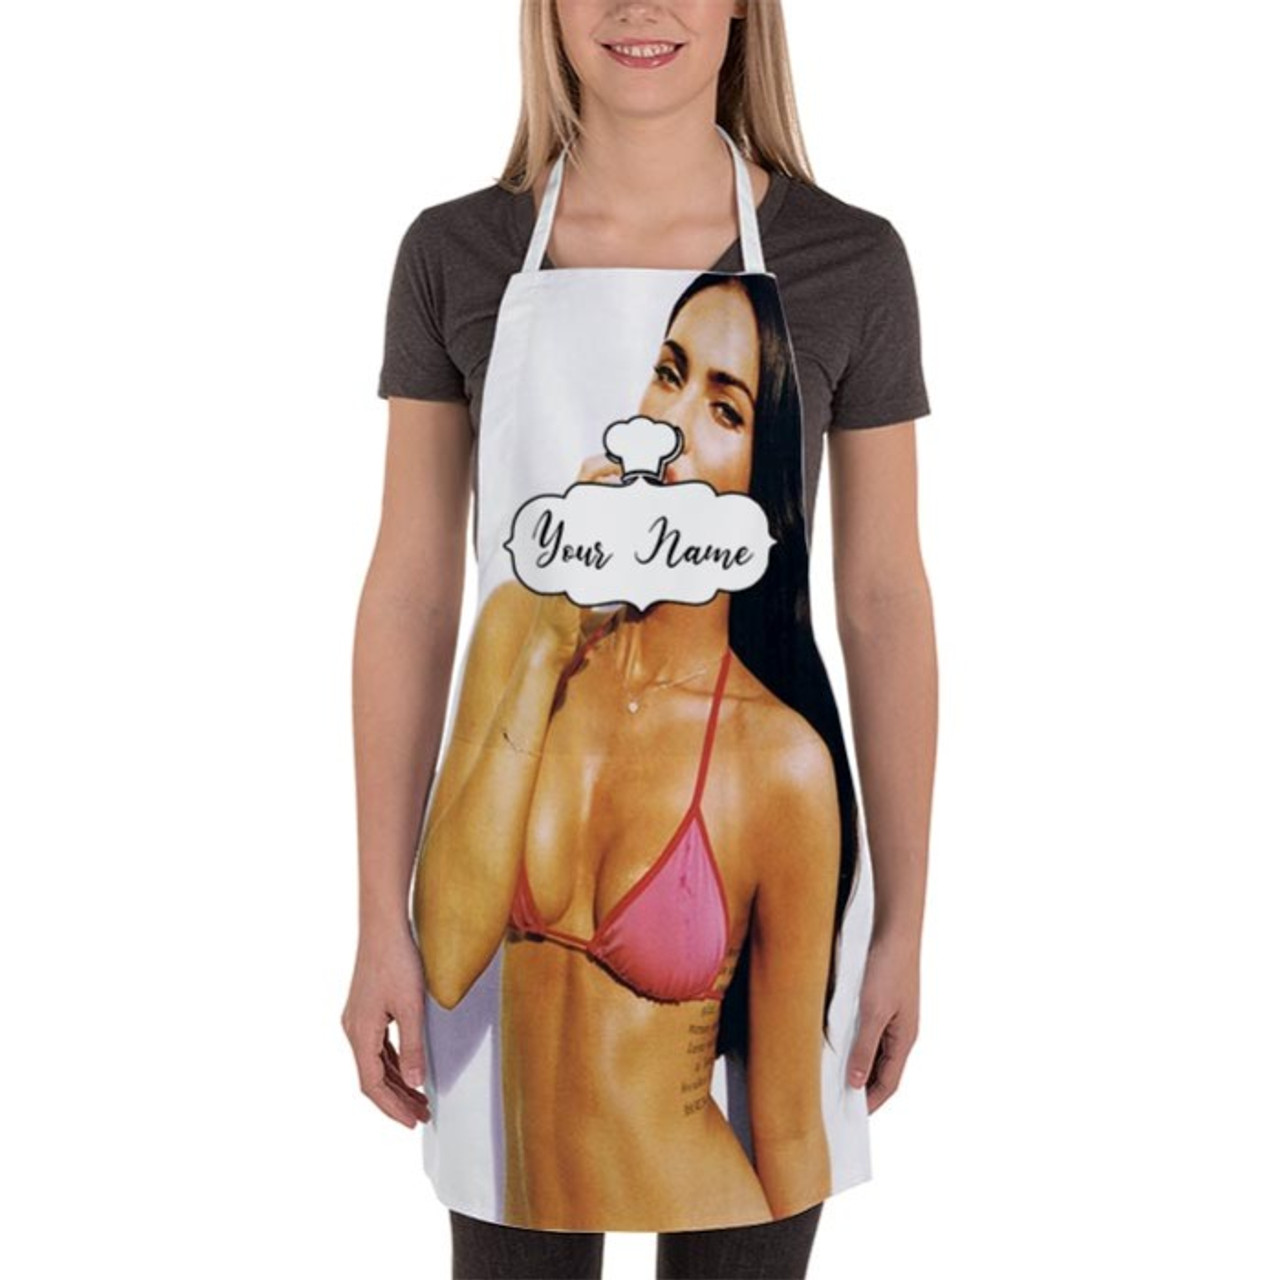 I am an artist apron - megan auman